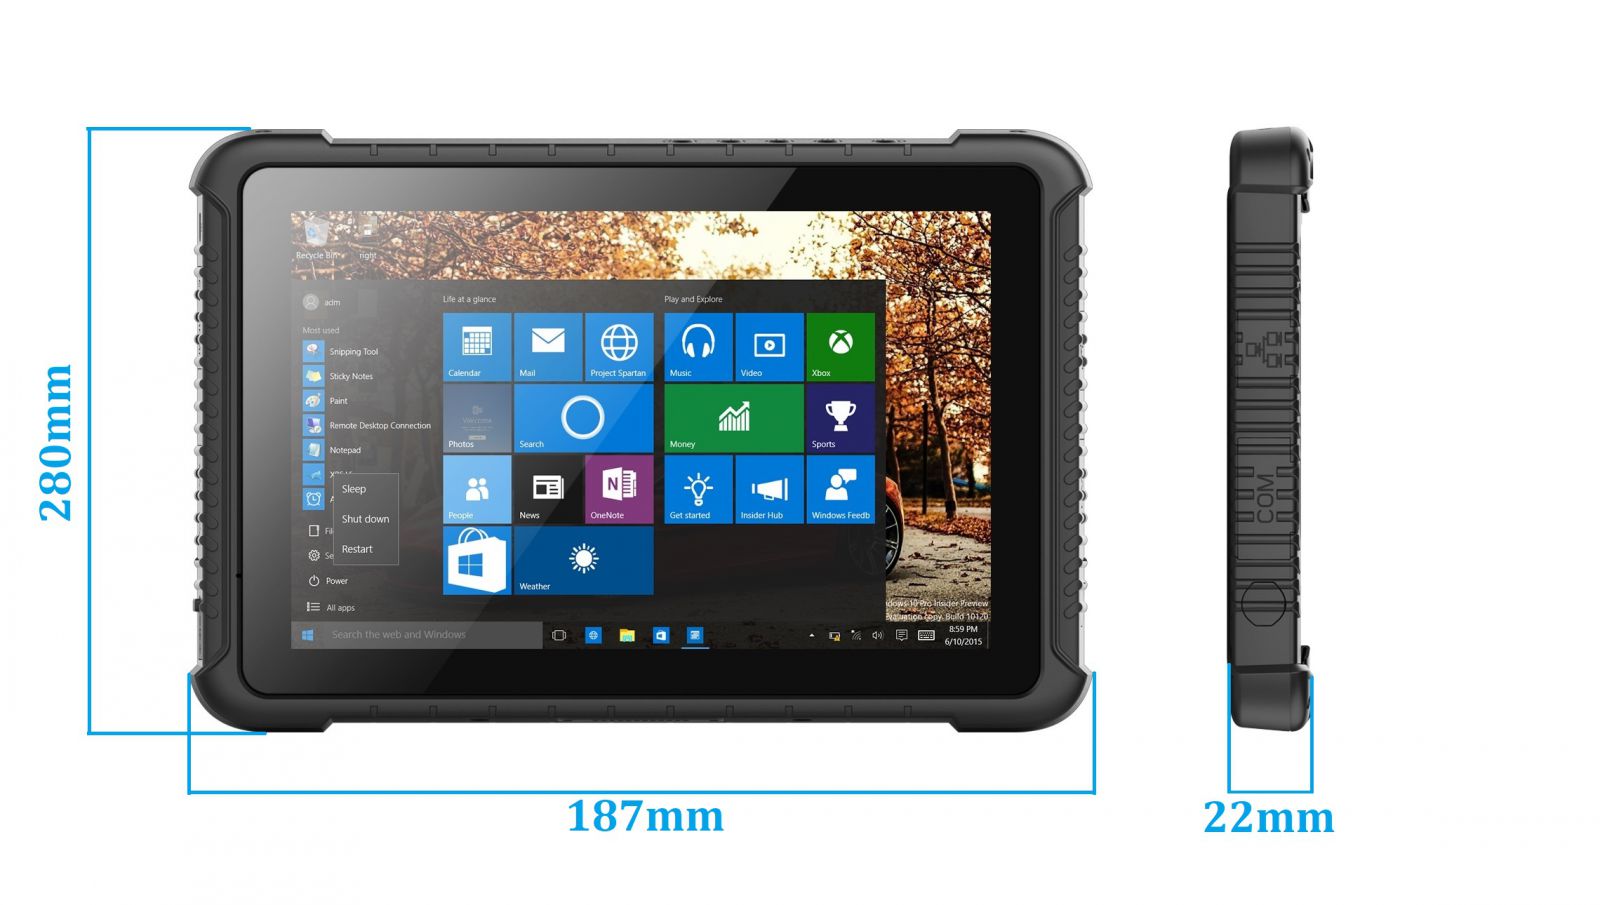 Emdoor I16K v.9 - Shockproof 10-inch tablet (IP65 + MIL-STD-810G) with Honeywell 2D barcode scanner, 4GB RAM, Flash 128GB, BT 4.2 and screen foil 